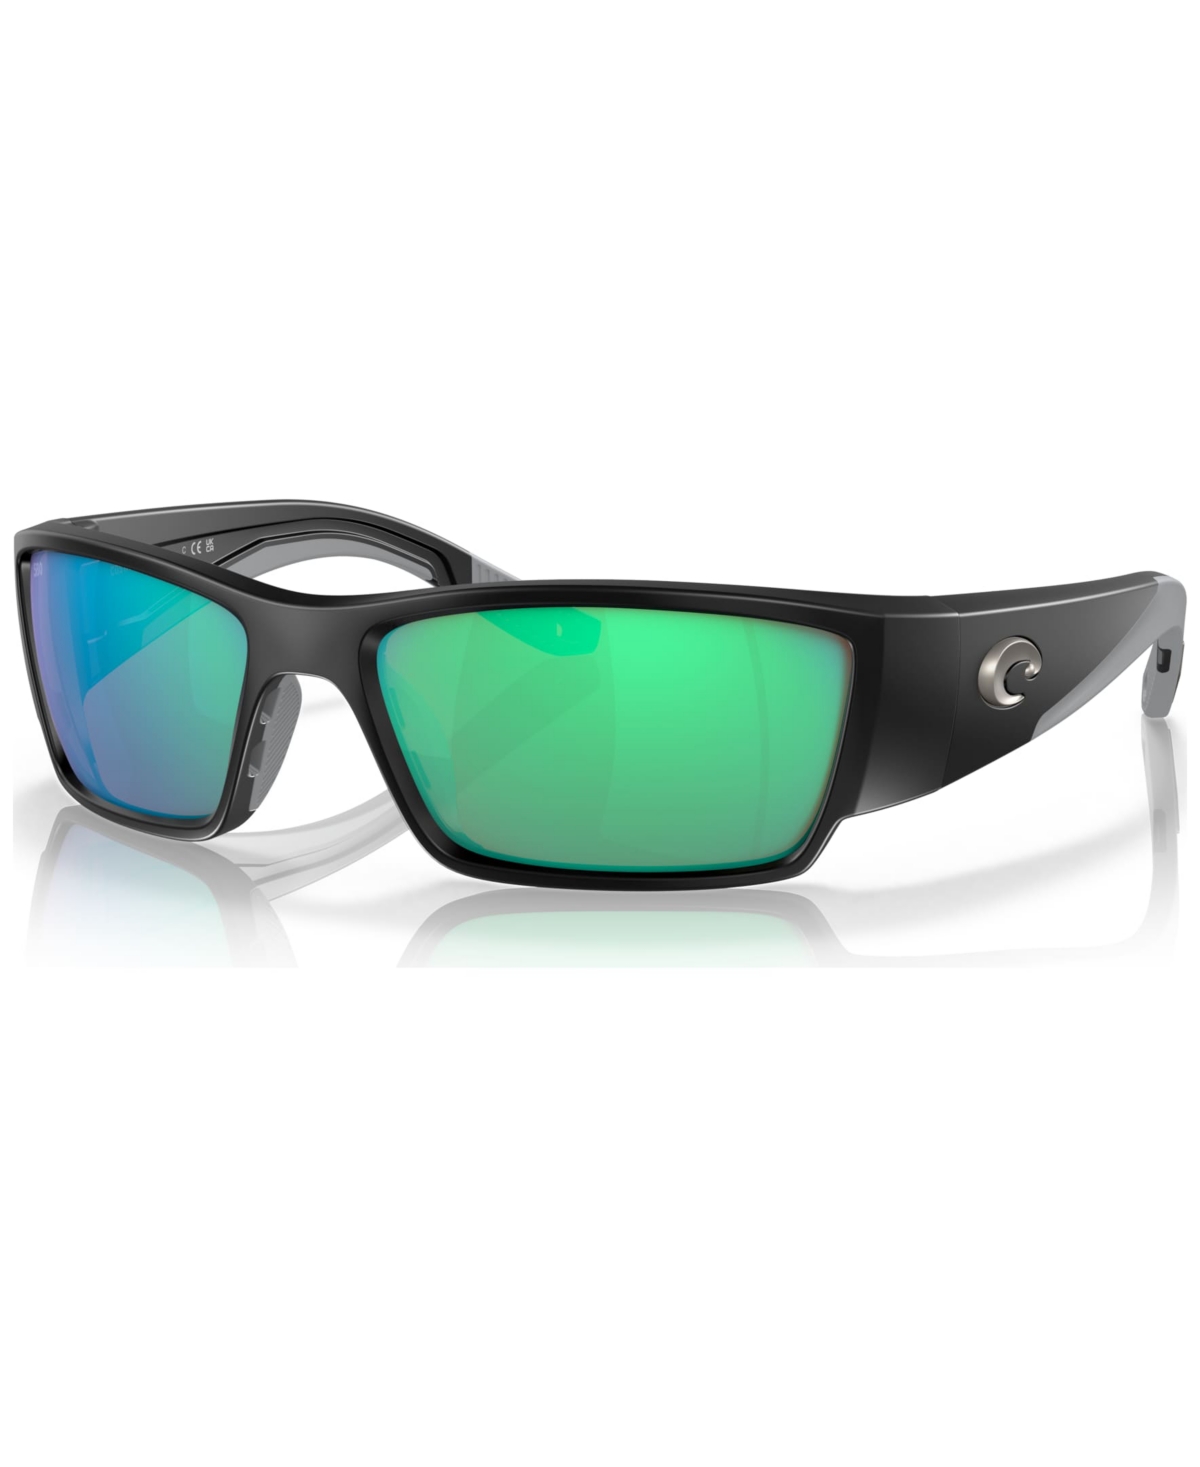 Men's Polarized Sunglasses, Corbina Pro - Matte Black-